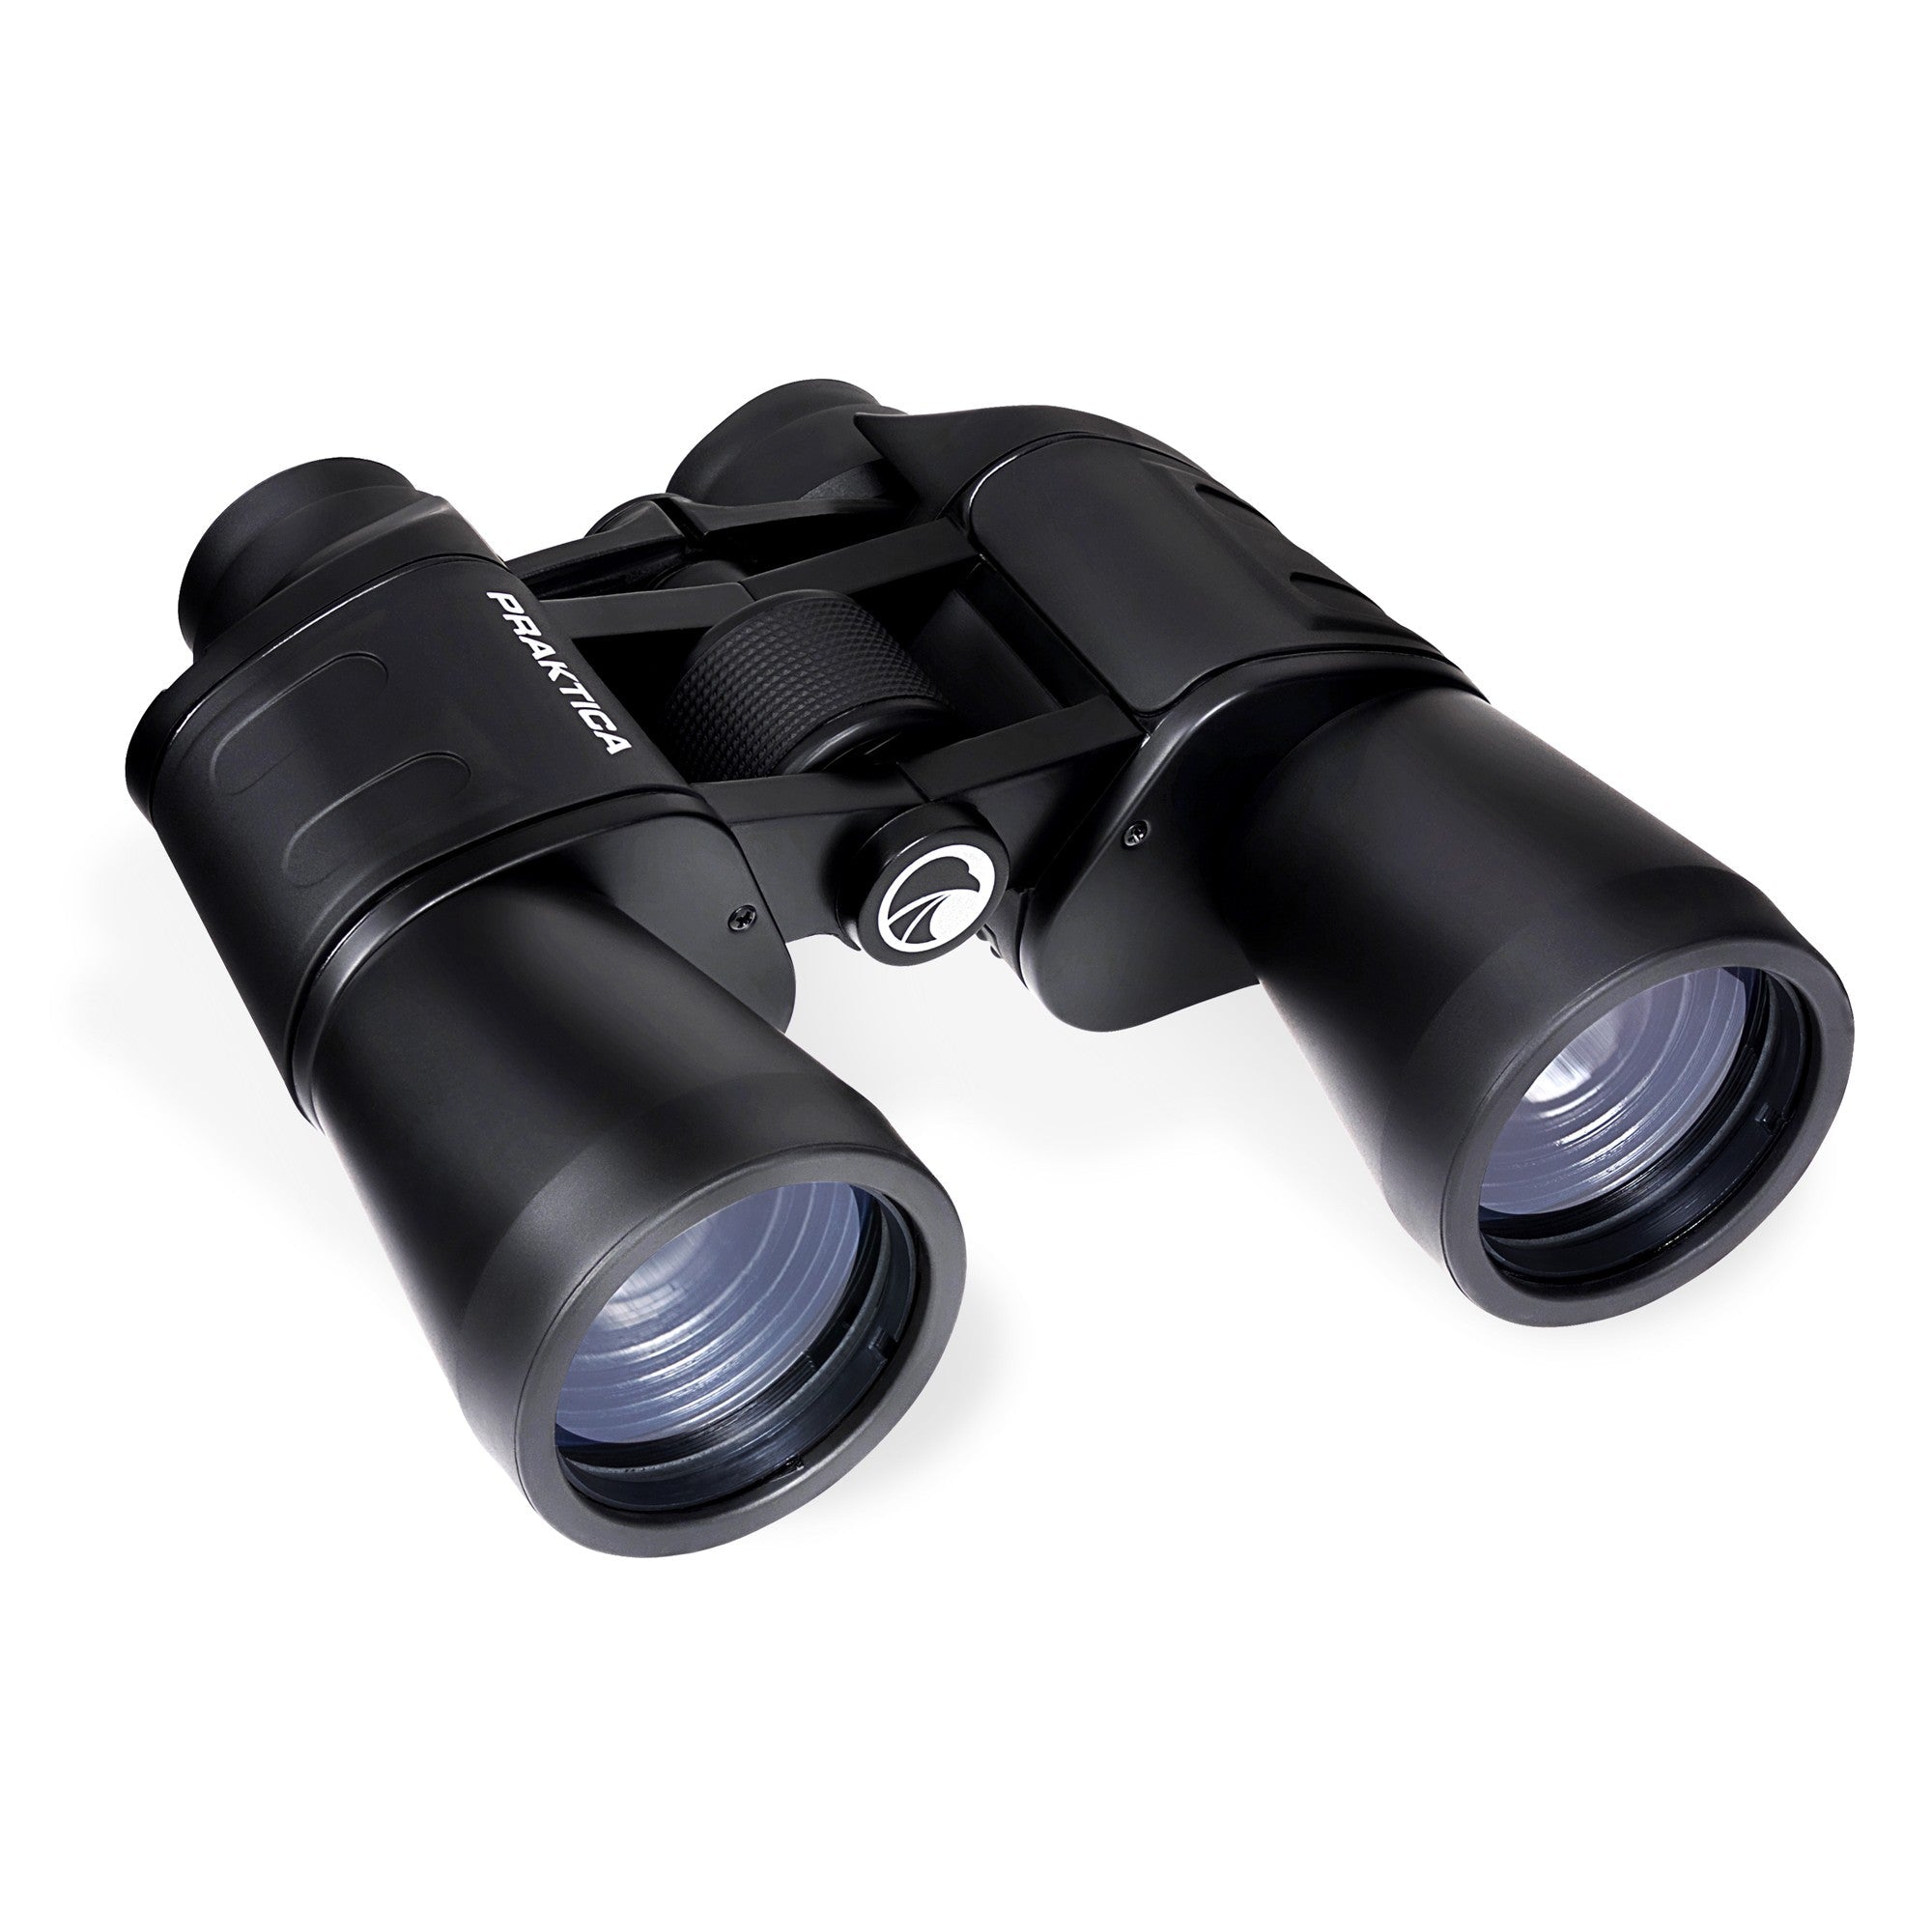 PRAKTICA Falcon 12x50mm Porro Prism Field Binoculars - Black (Binoculars Only)